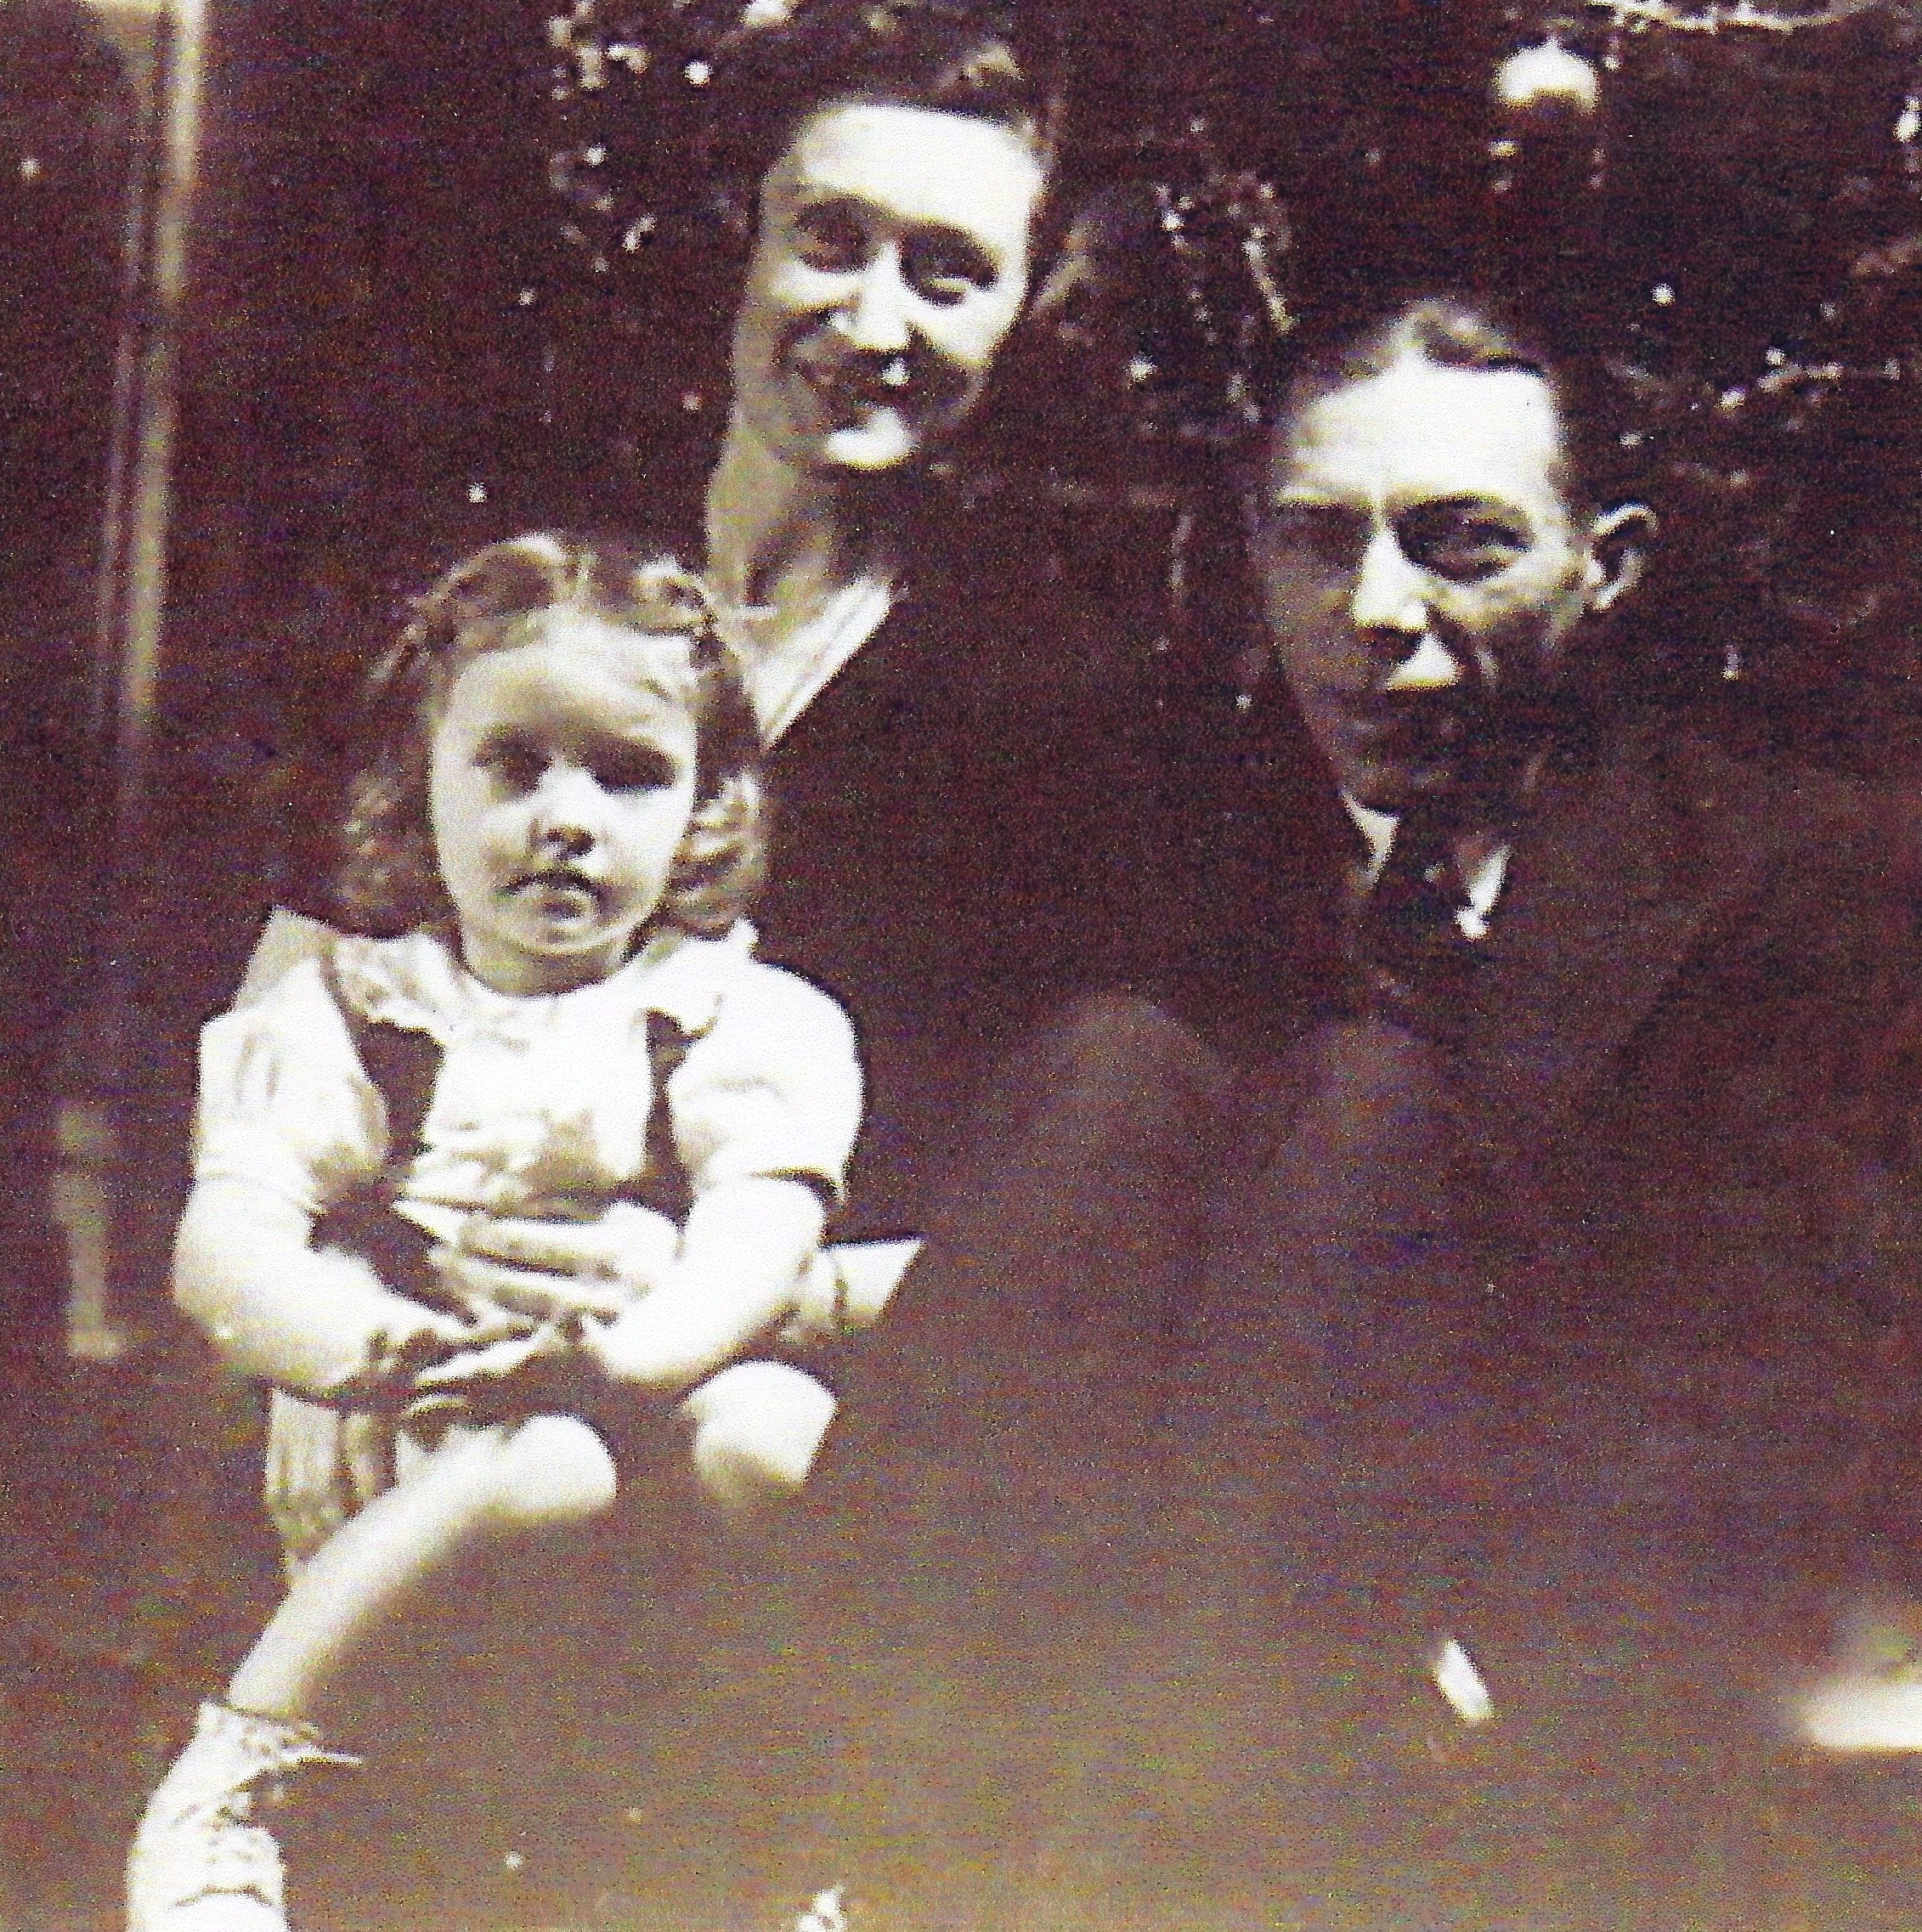 Reynolds family Christmas, New York 1940